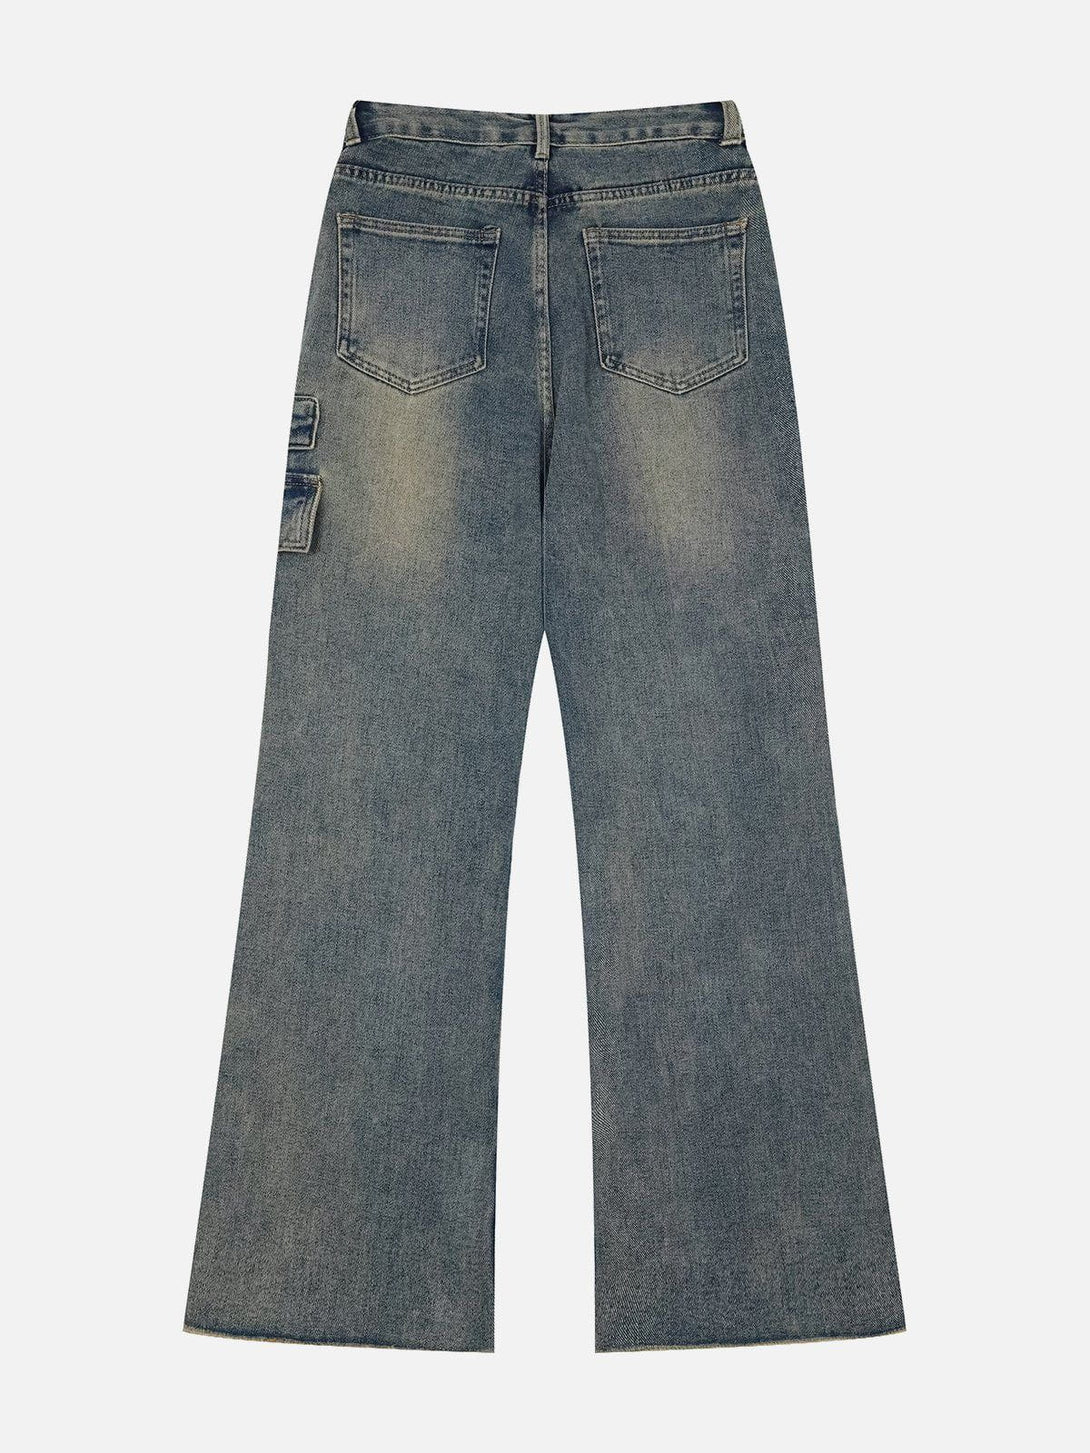 AlanBalen® - Washed Discreet Side Pockets Jeans AlanBalen